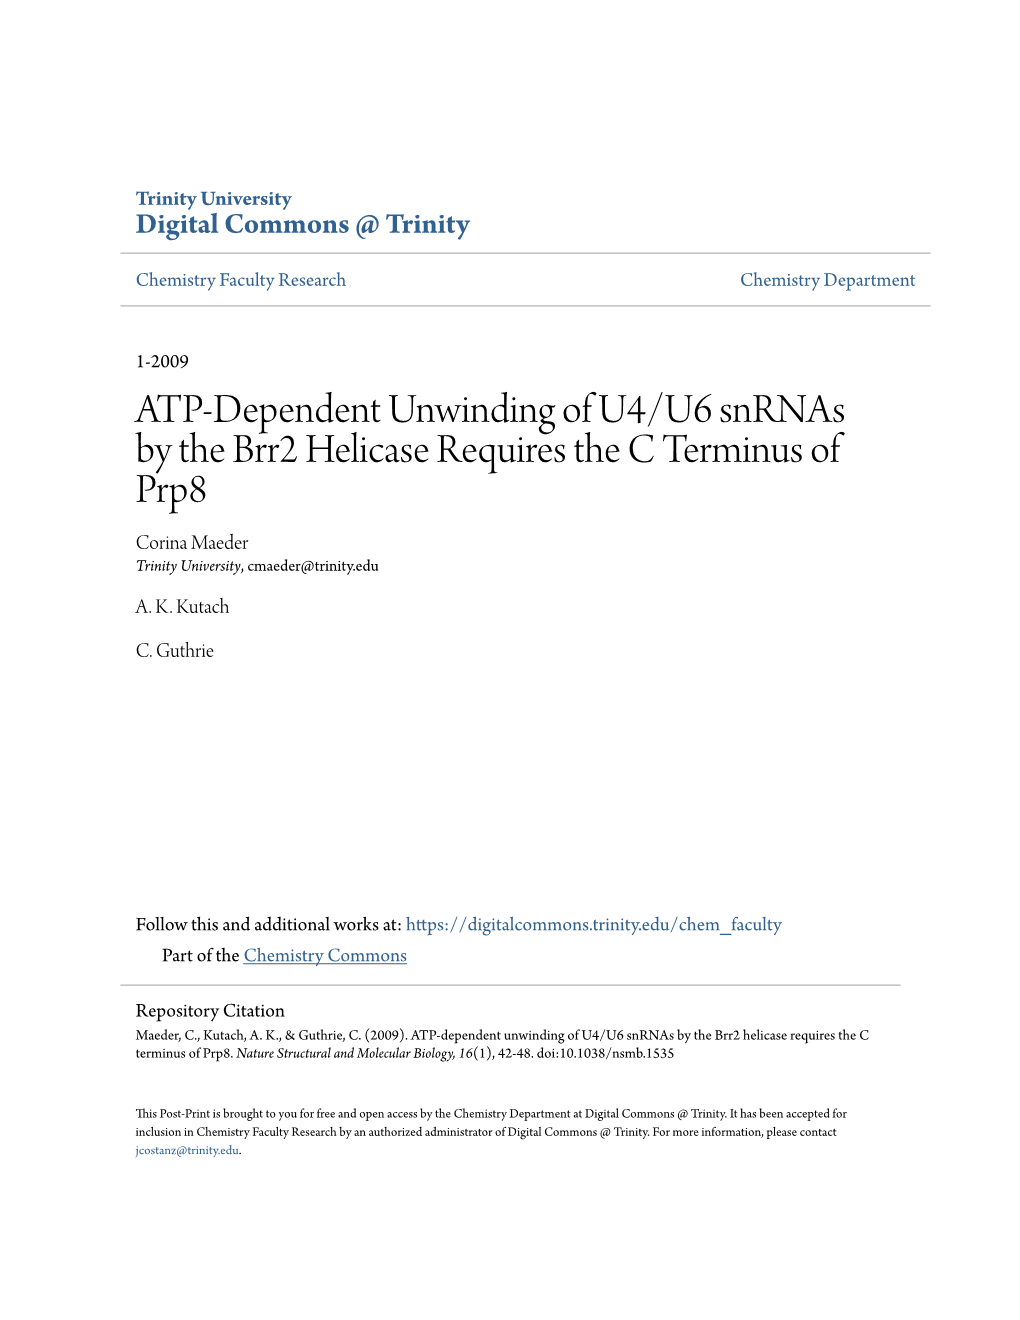 ATP-Dependent Unwinding of U4/U6 Snrnas by the Brr2 Helicase Requires the C Terminus of Prp8 Corina Maeder Trinity University, Cmaeder@Trinity.Edu